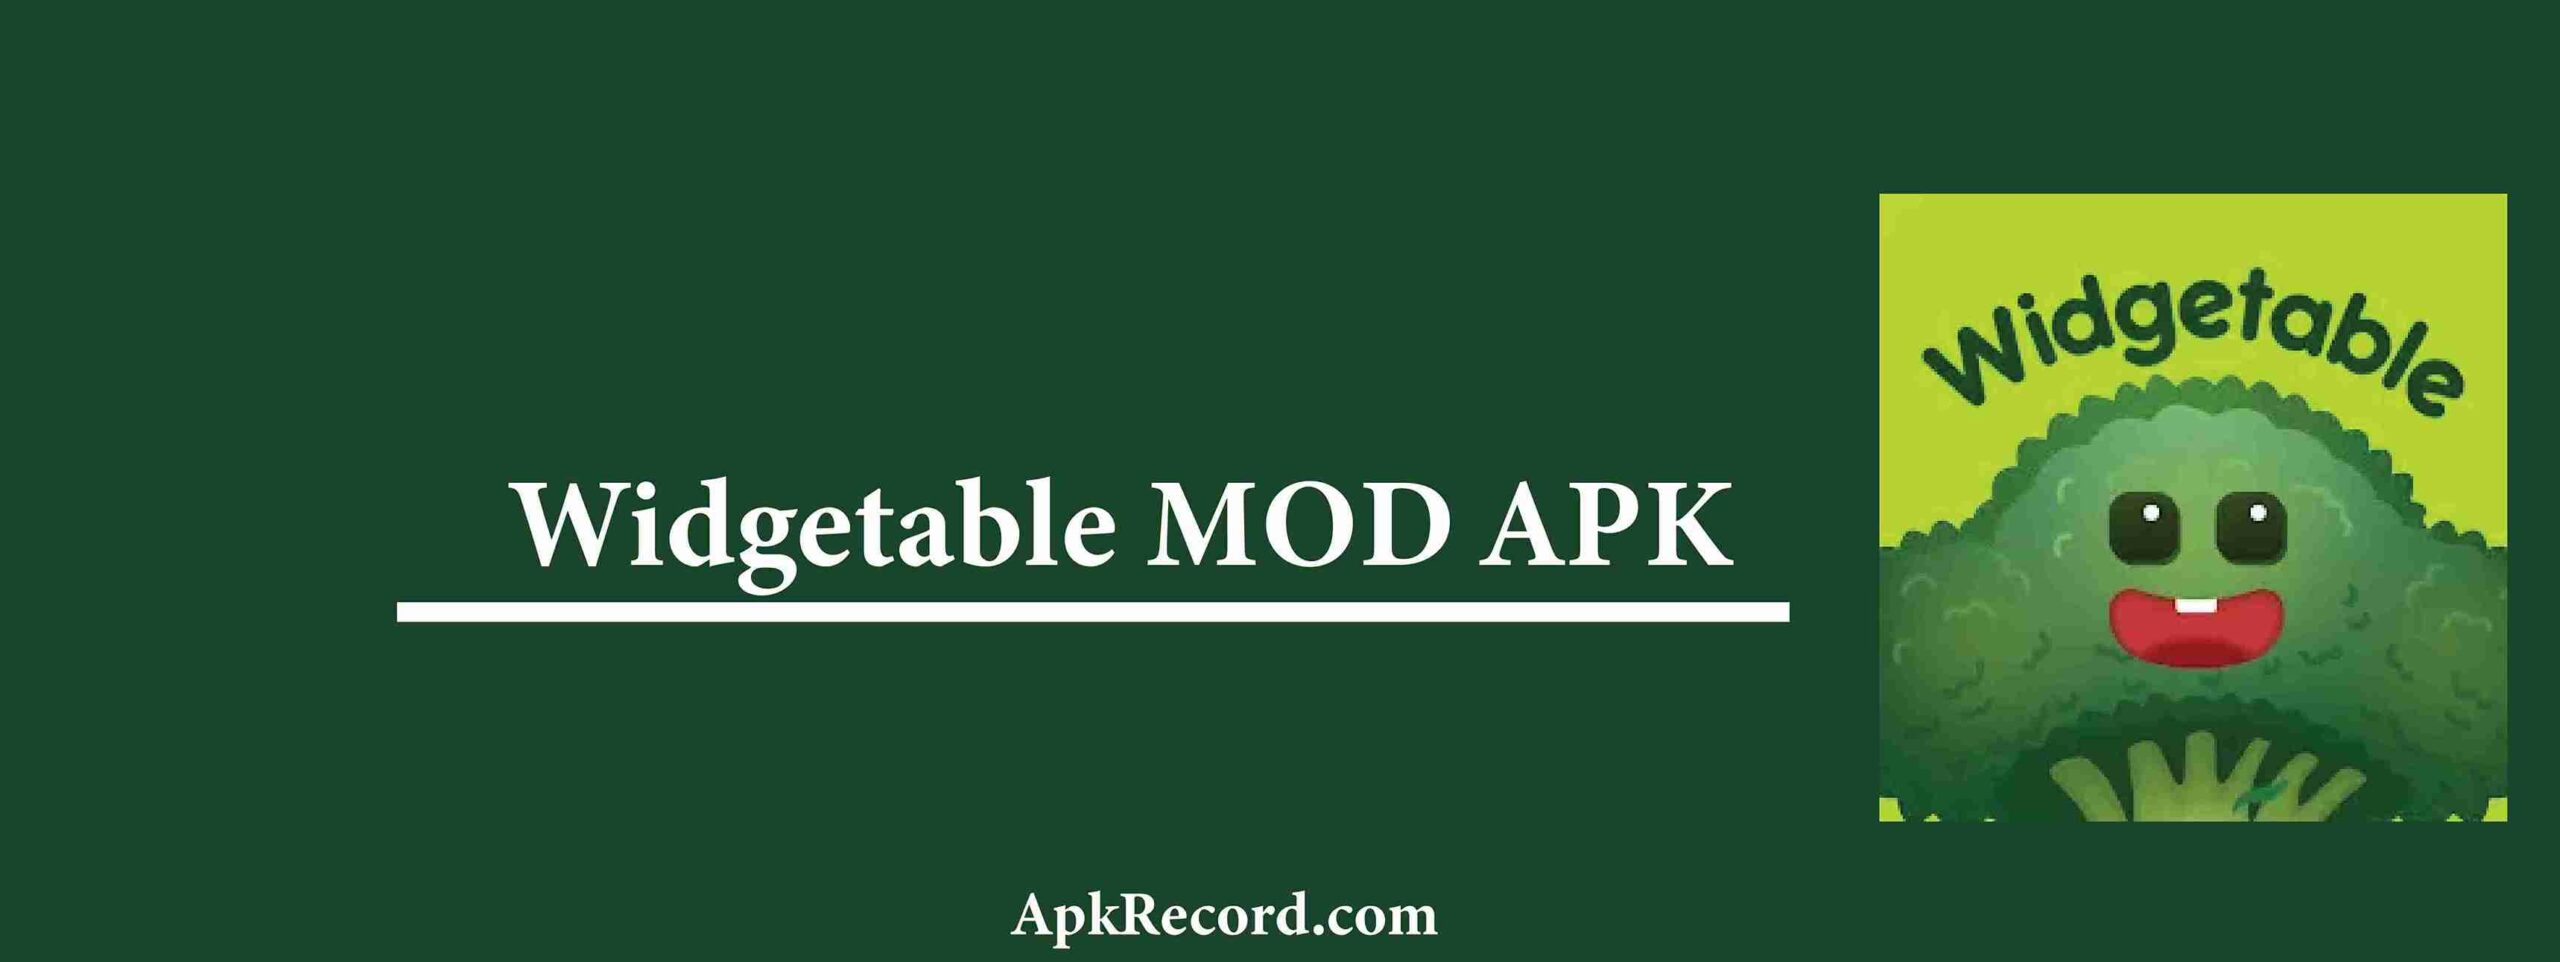 Widgetable MOD APK V1.5.050